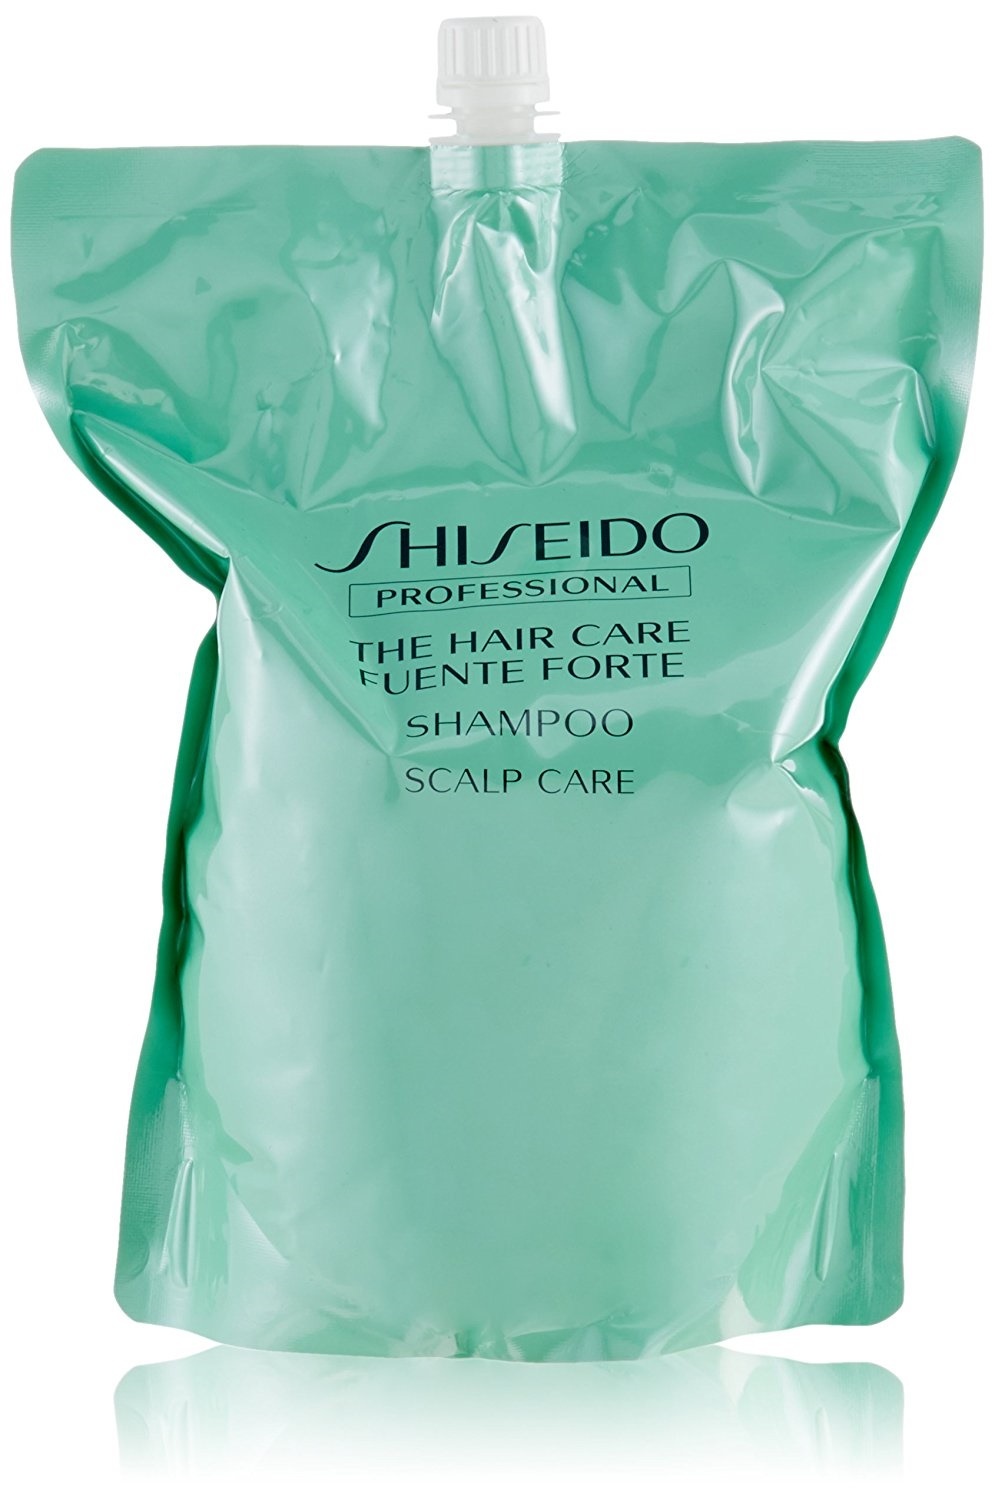 SHISEIDO Professional Fuente Forte shampoo 1800ml Refill